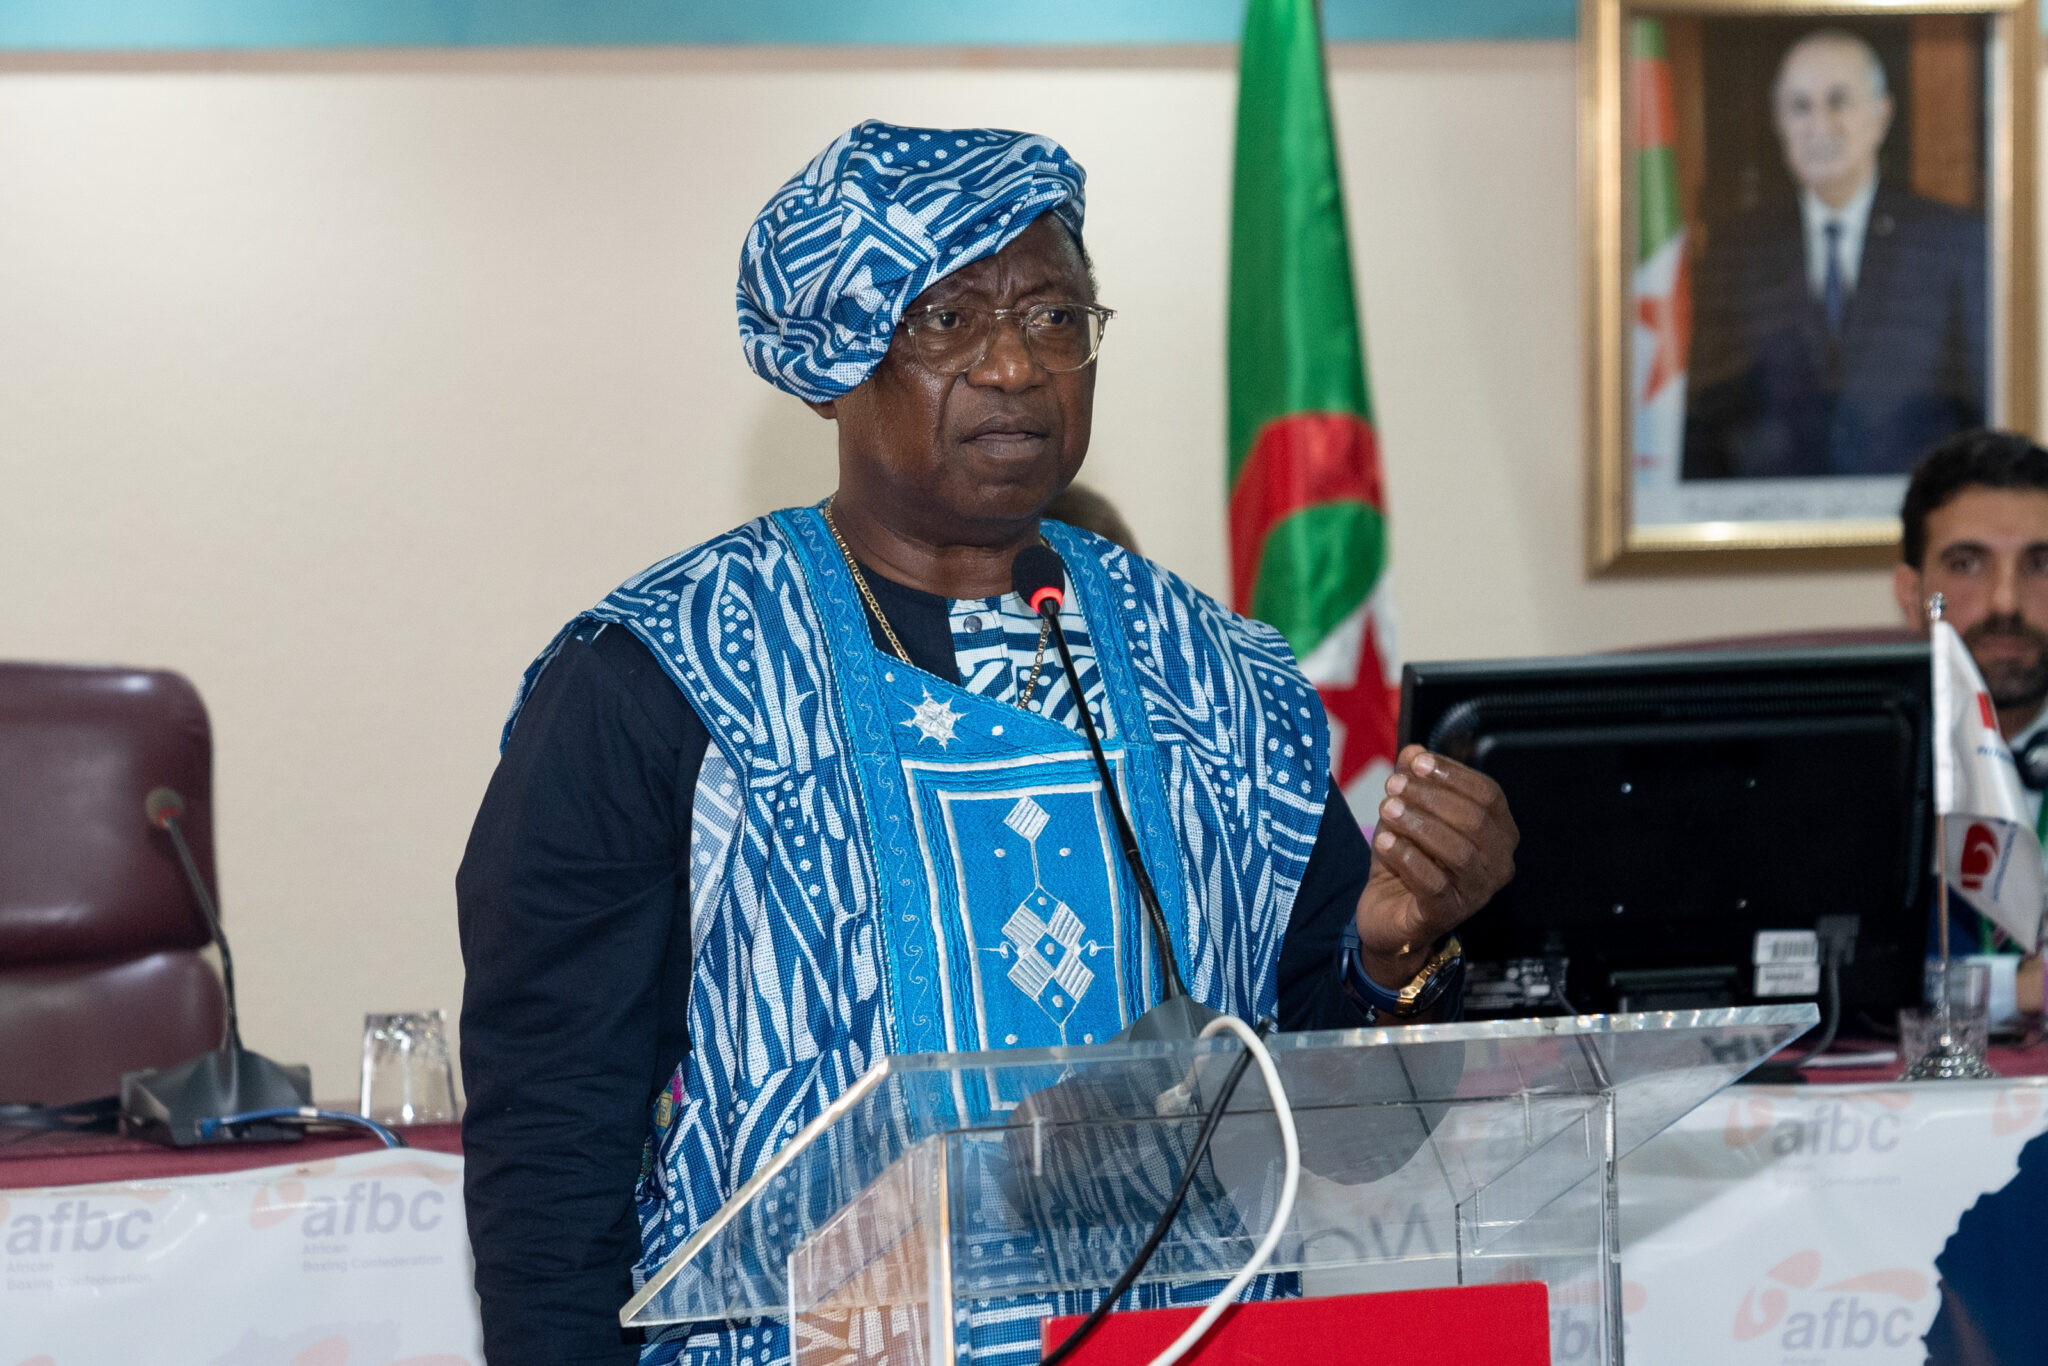 Bertrand Mendouga was elected as AFBC President last year ©IBA